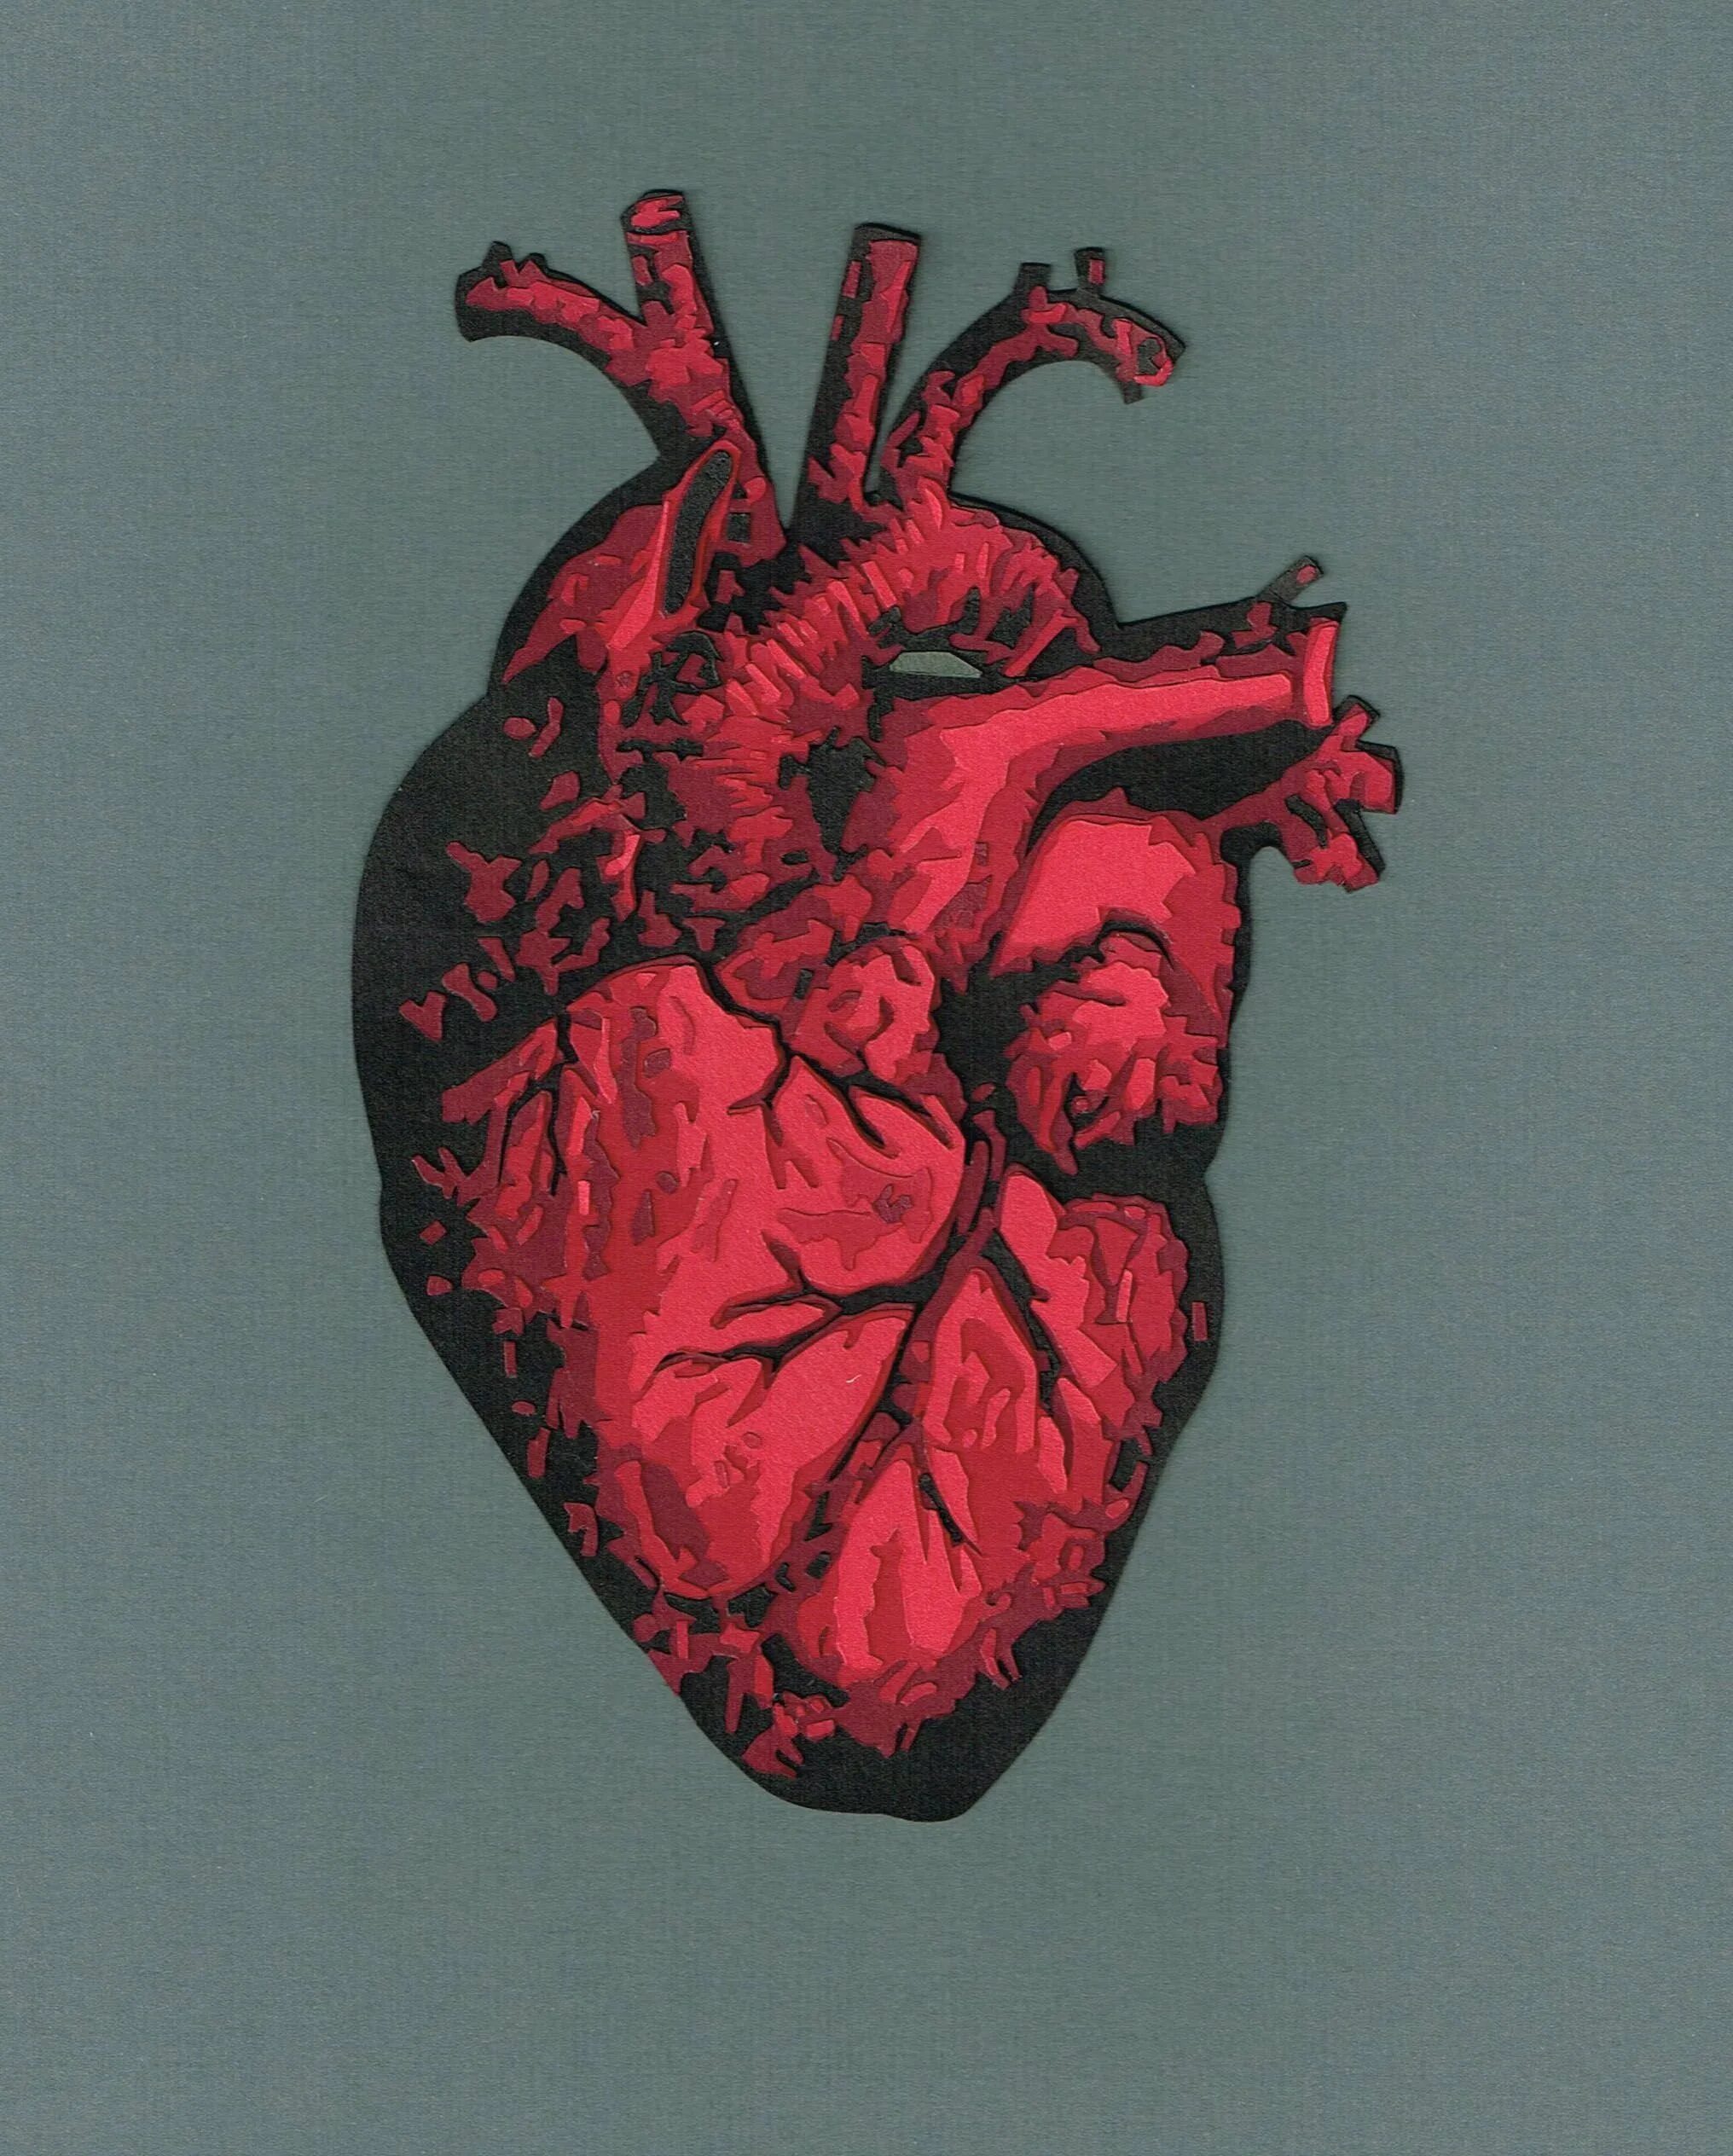 Человеческое сердце арт. Сердечко картинка эстетика